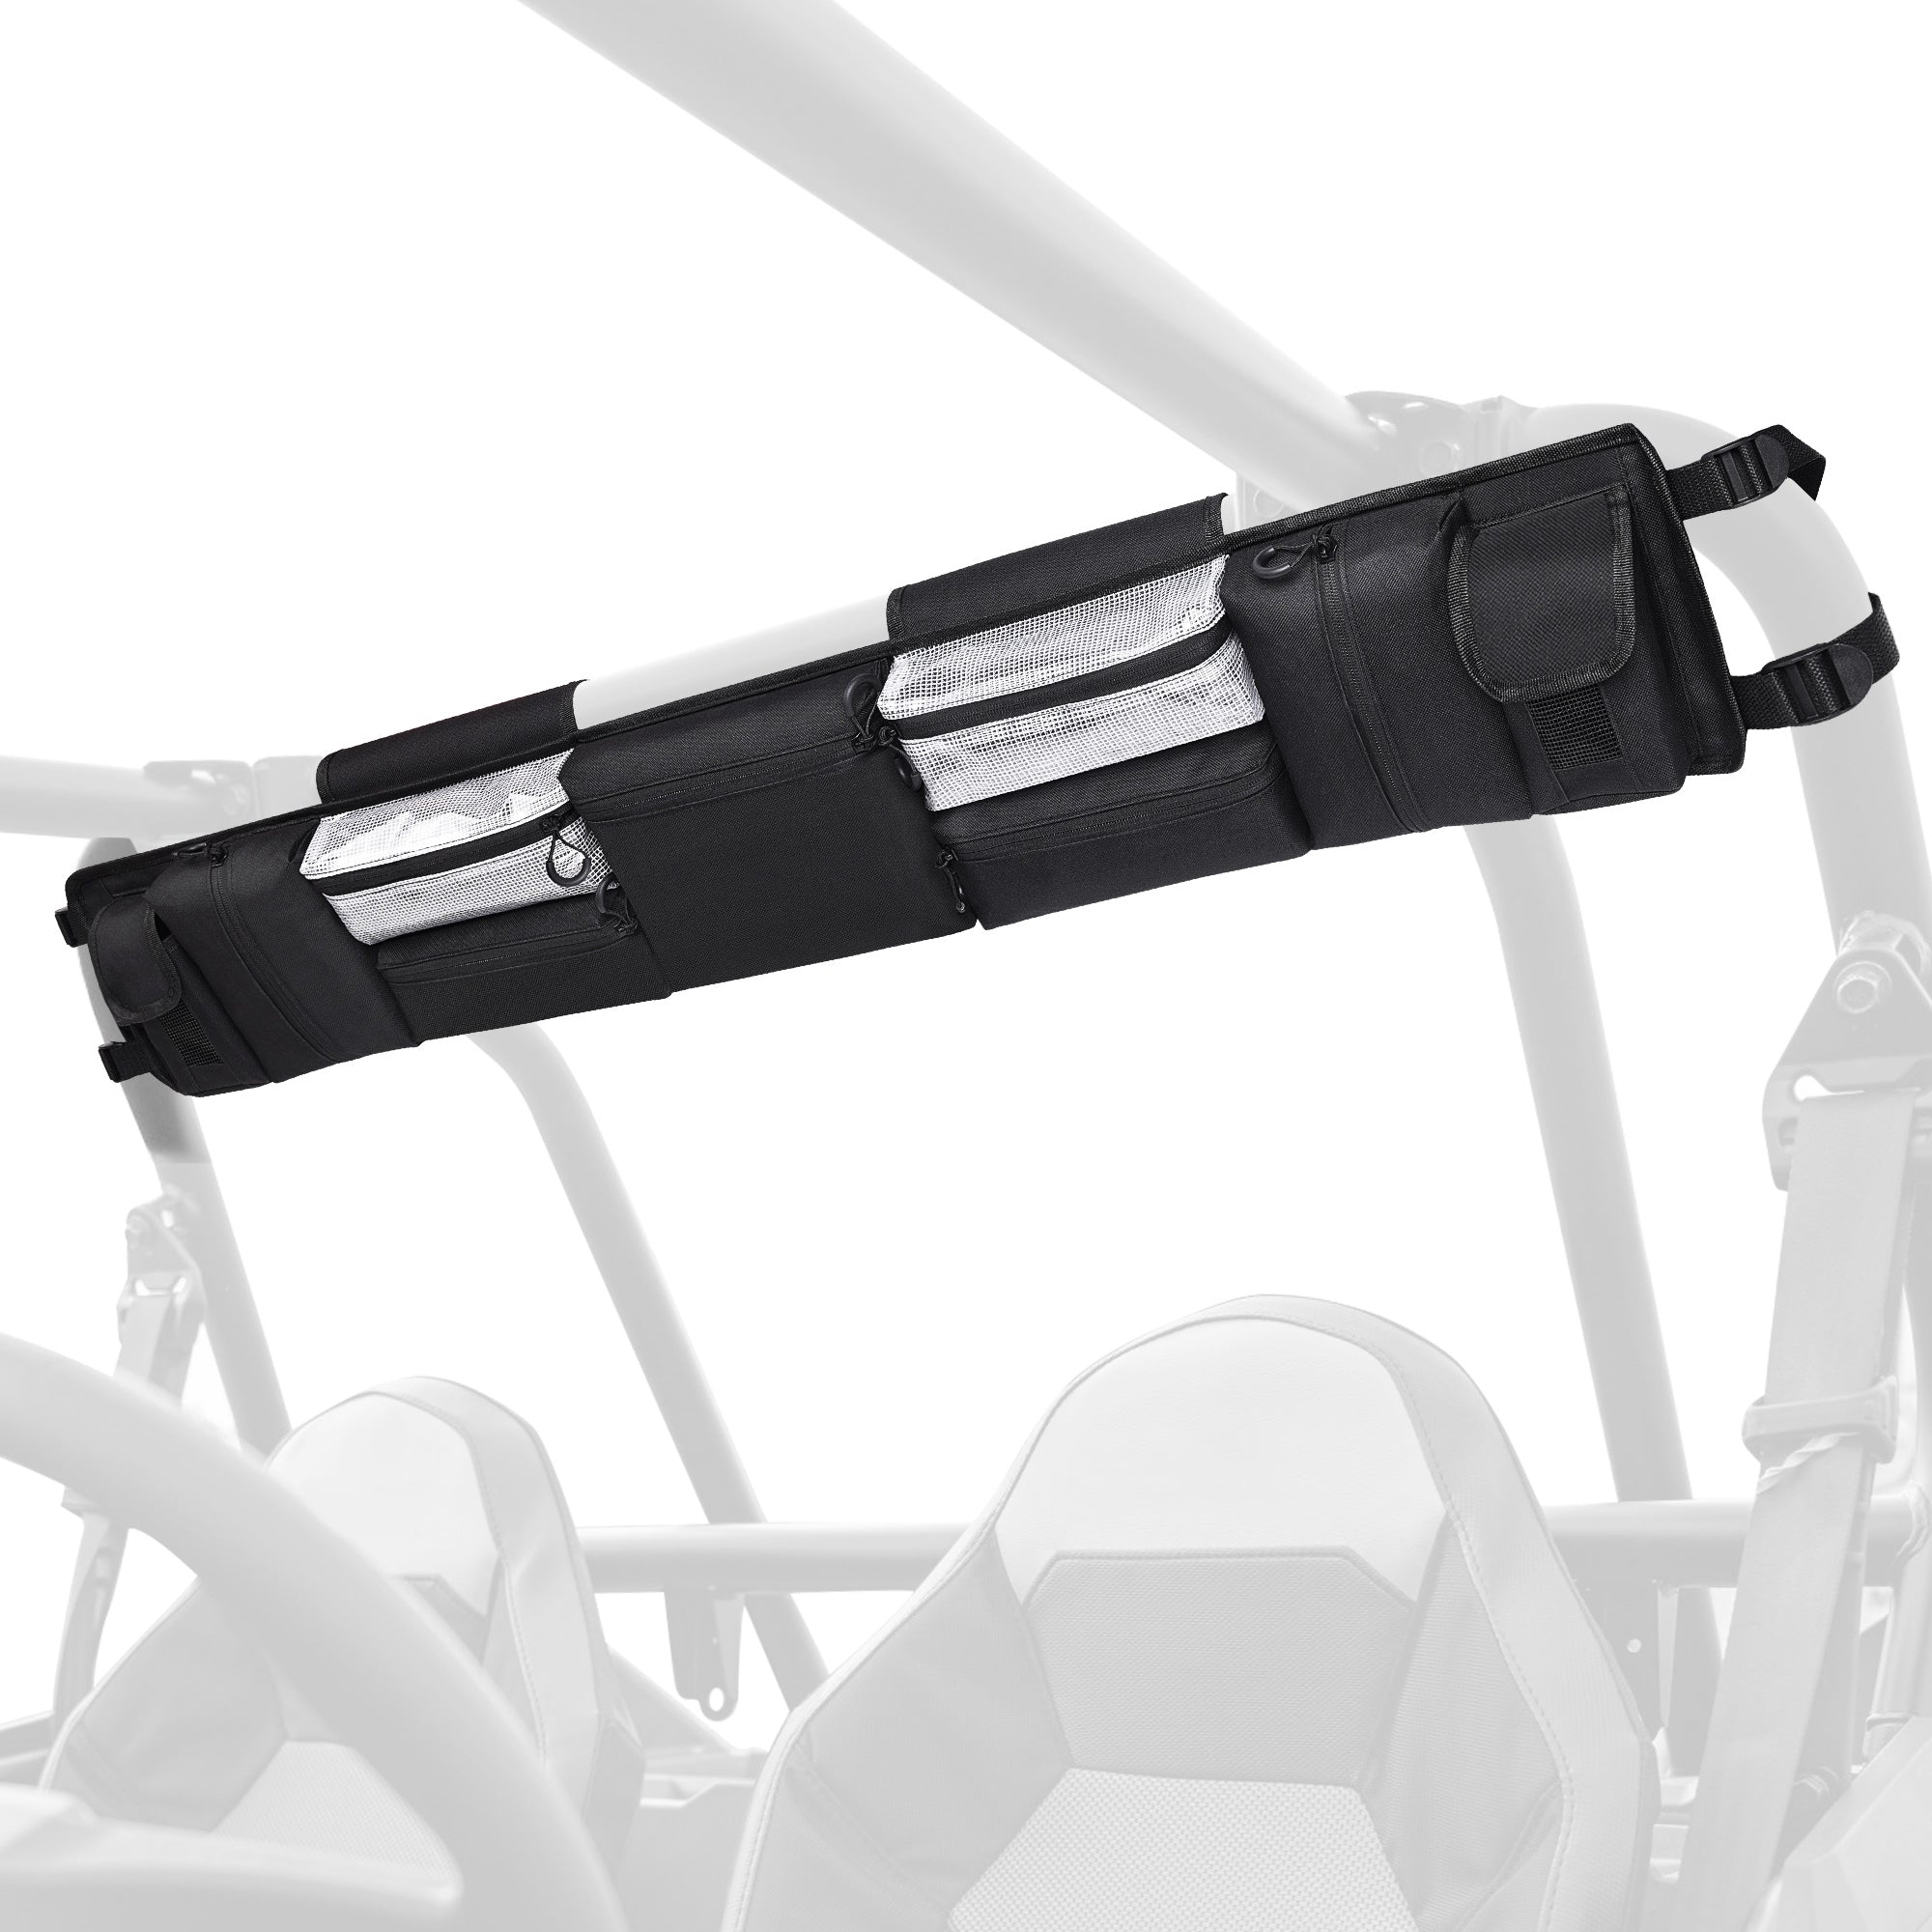 UTV Roll Cage Organizer, Cargo Rear Storage Bag Gear Tool Bag with Multiple Pockets